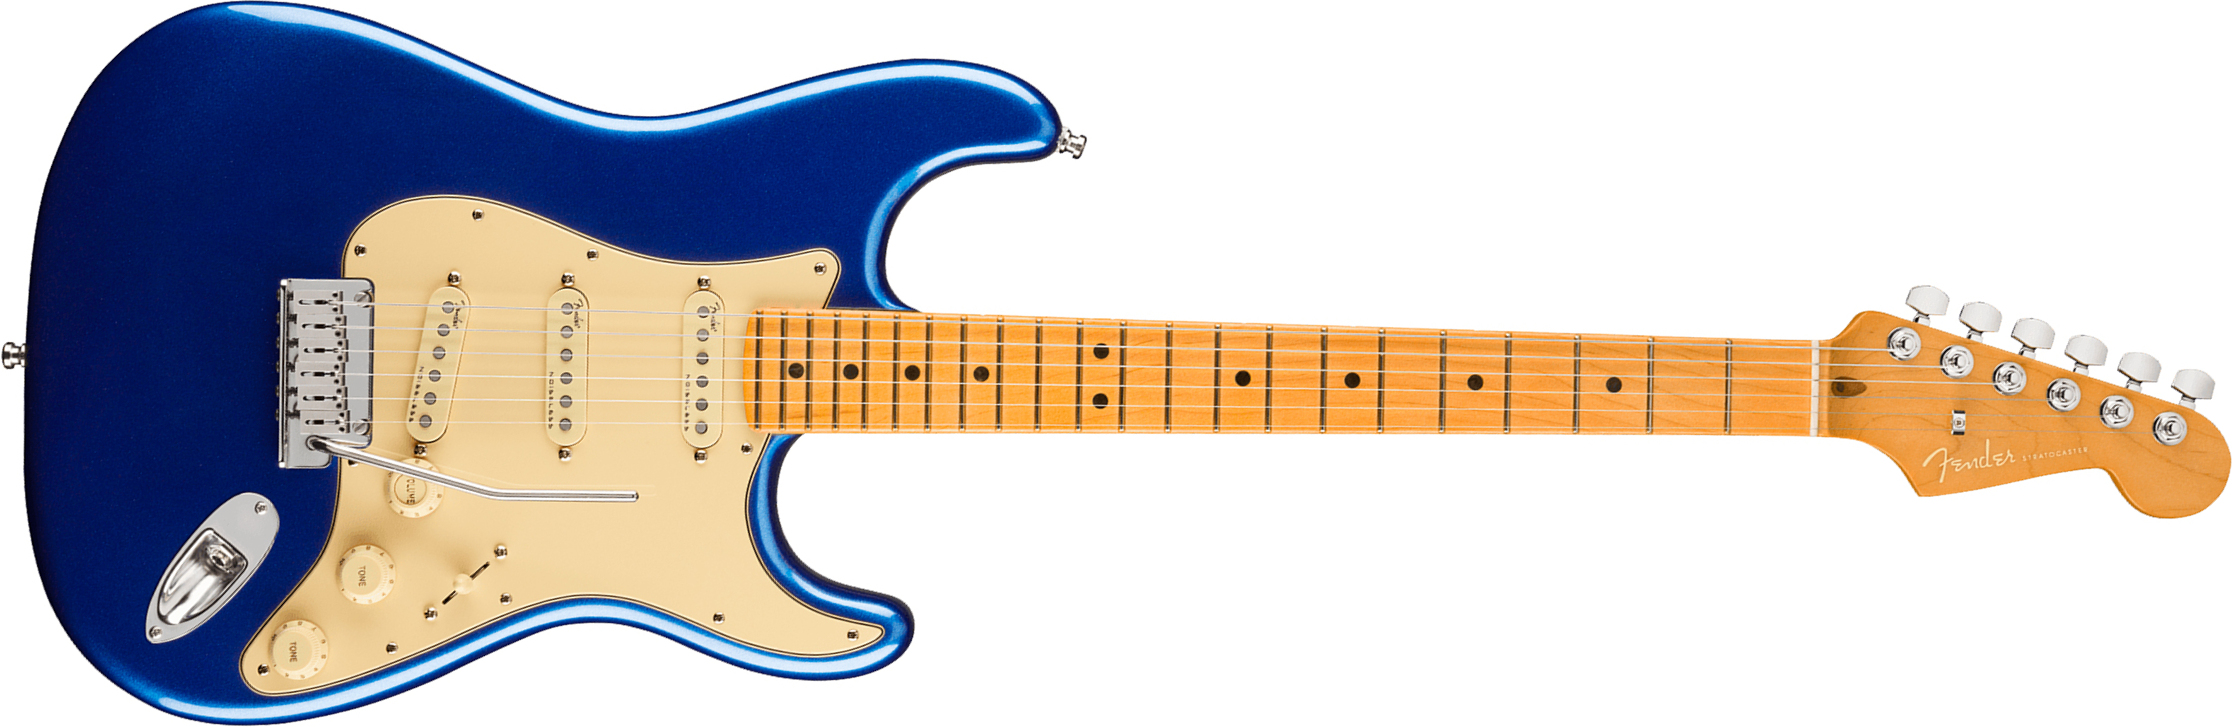 Fender Strat American Ultra 2019 Usa Mn - Cobra Blue - Guitarra eléctrica con forma de str. - Main picture